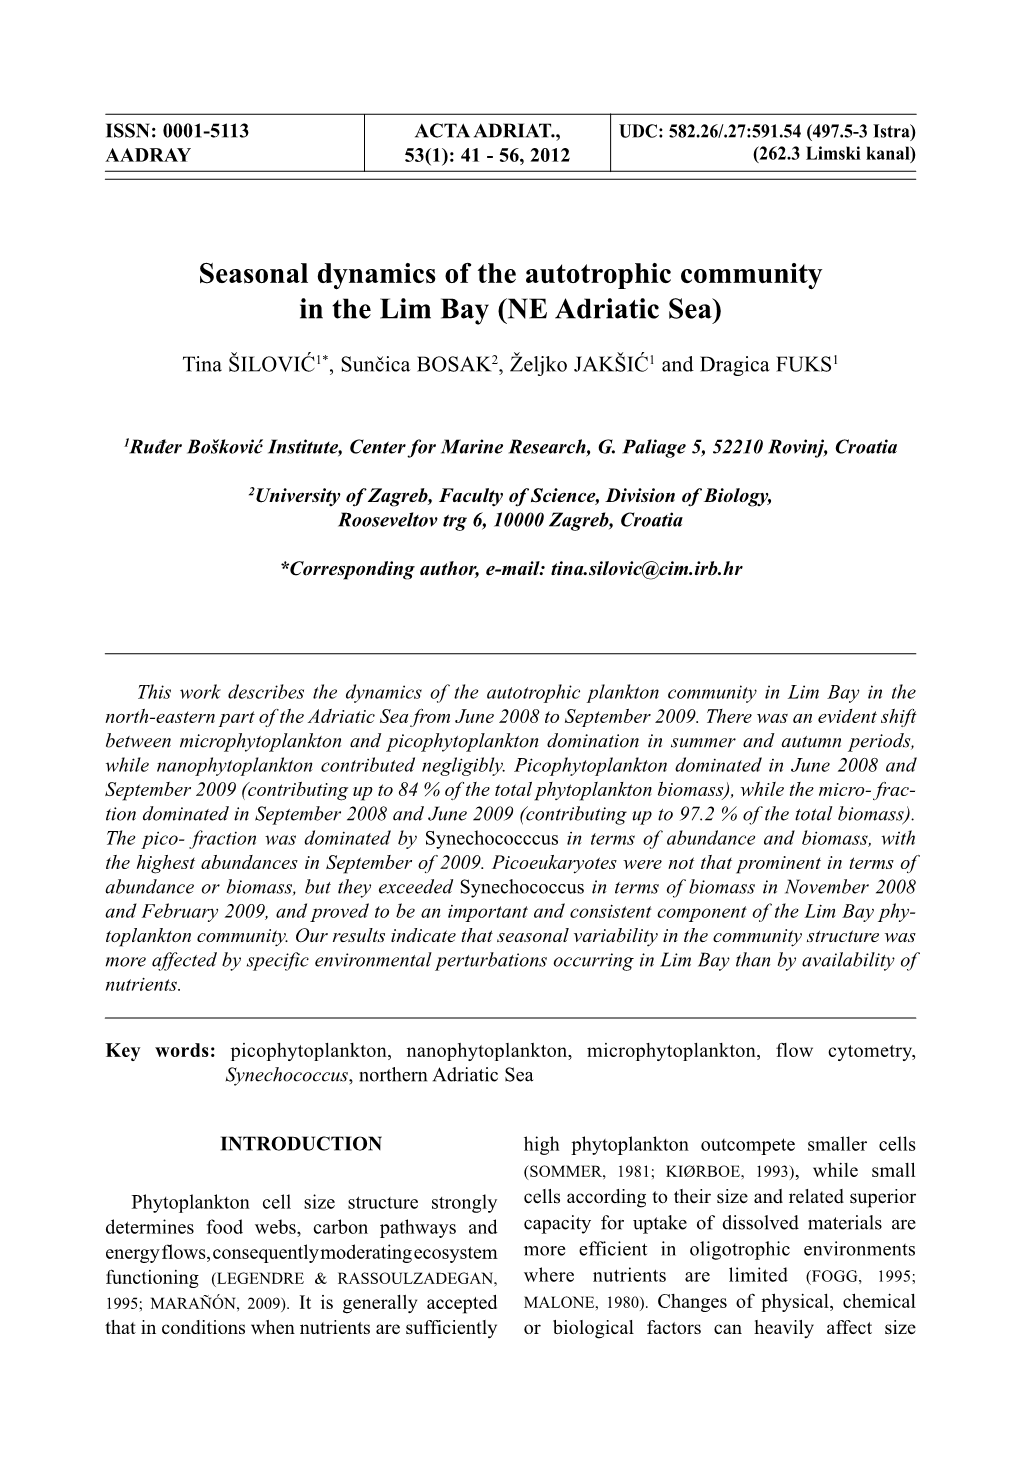 Seasonal Dynamics of the Autotrophic Community in the Lim Bay (NE Adriatic Sea)